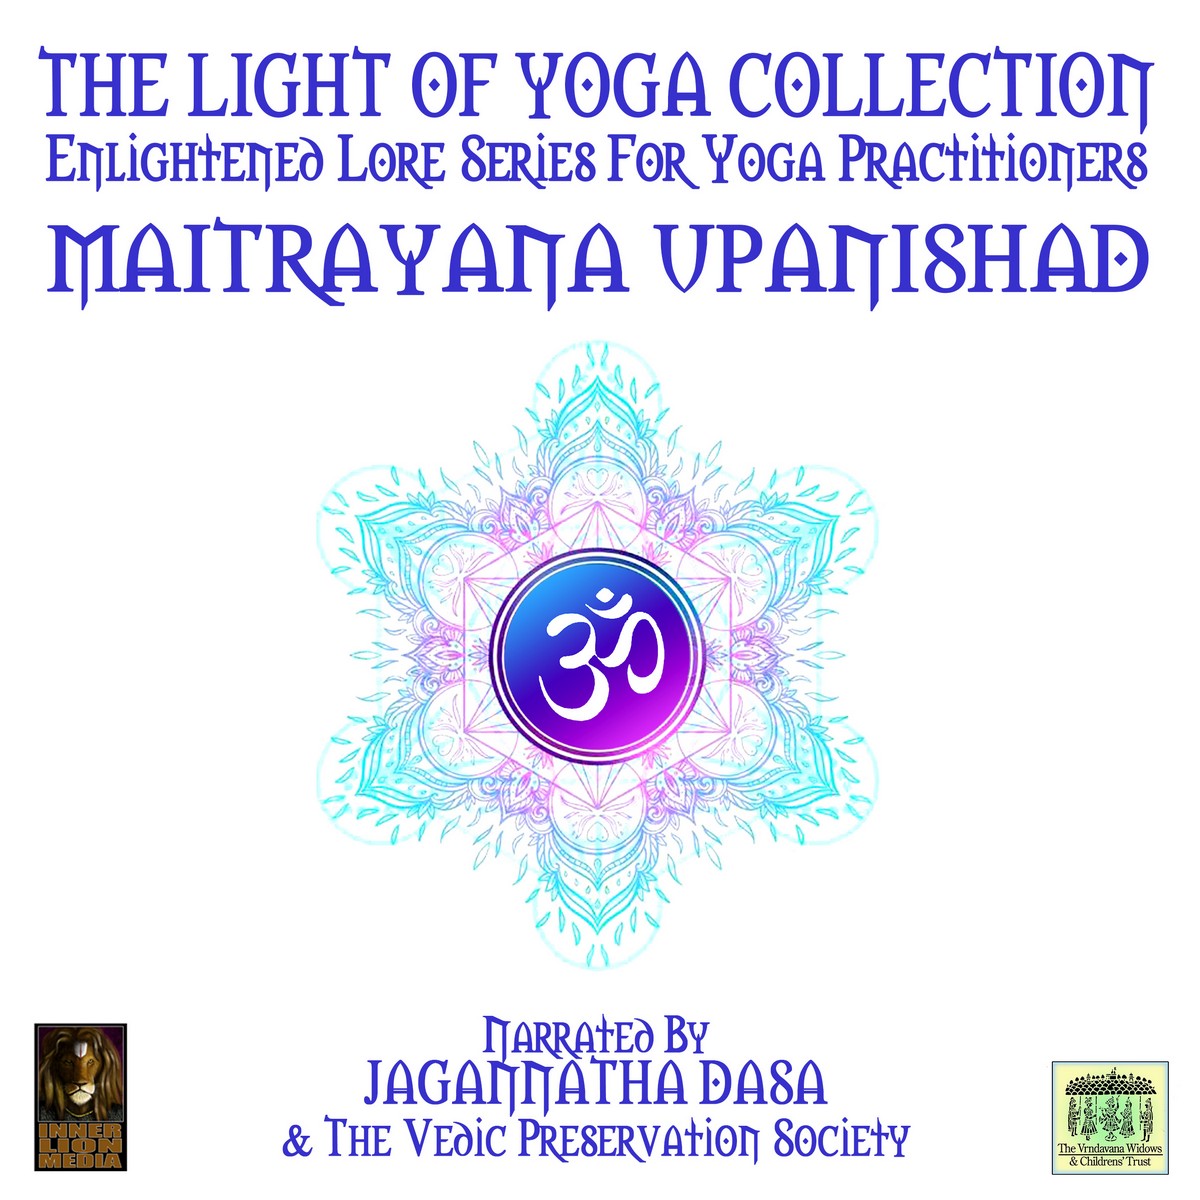 The Light Of Yoga Collection – Maitrayana Upanishad